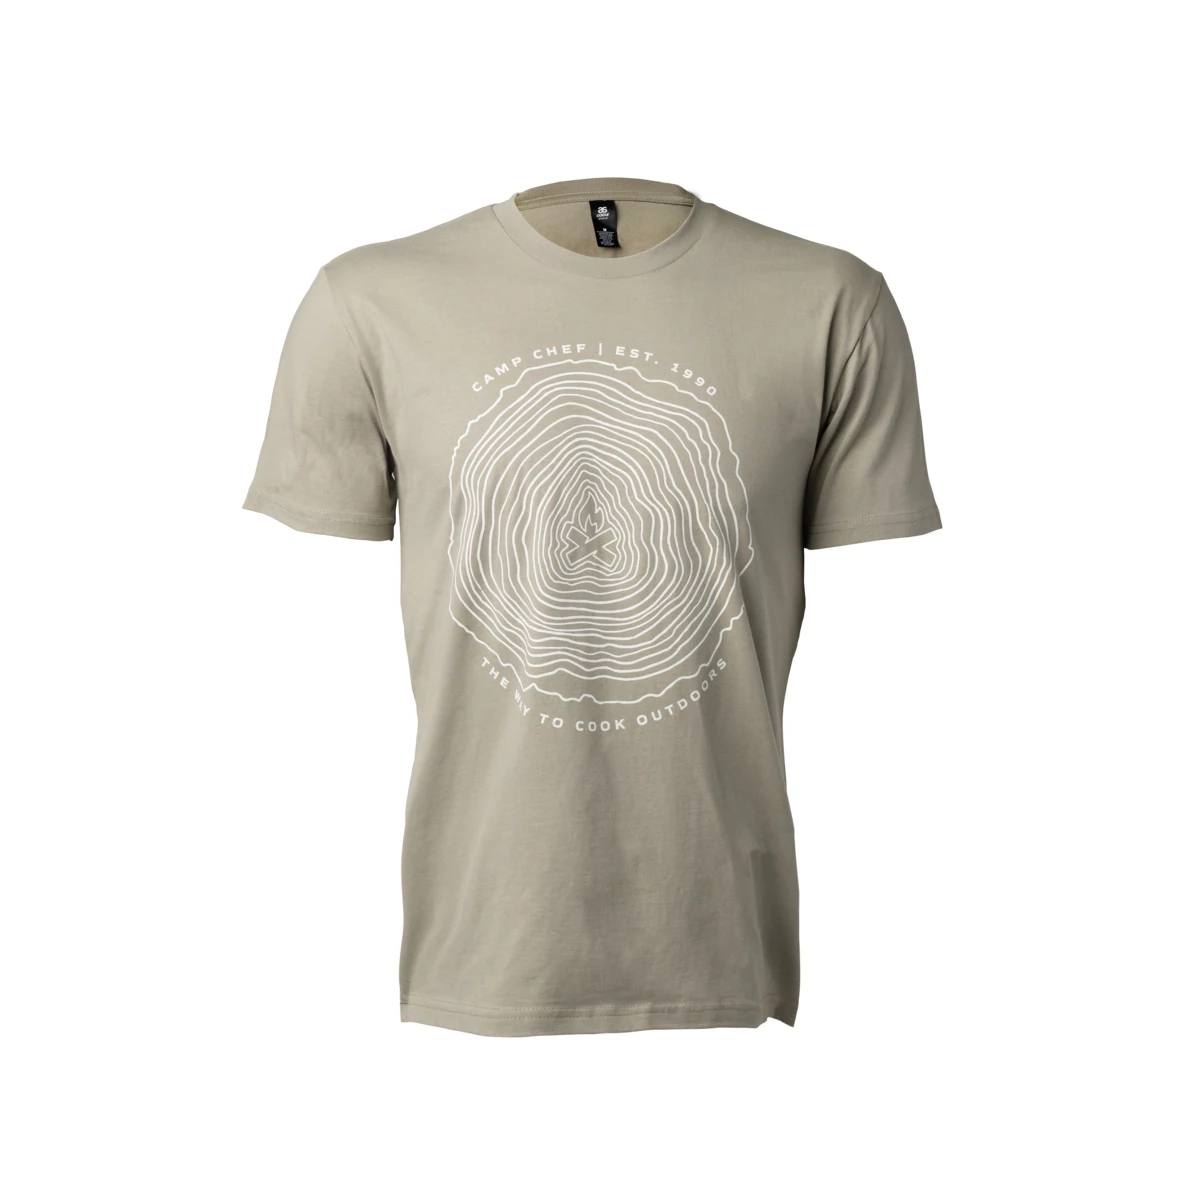 Camp Chef Tree Ring T-Shirt - XL